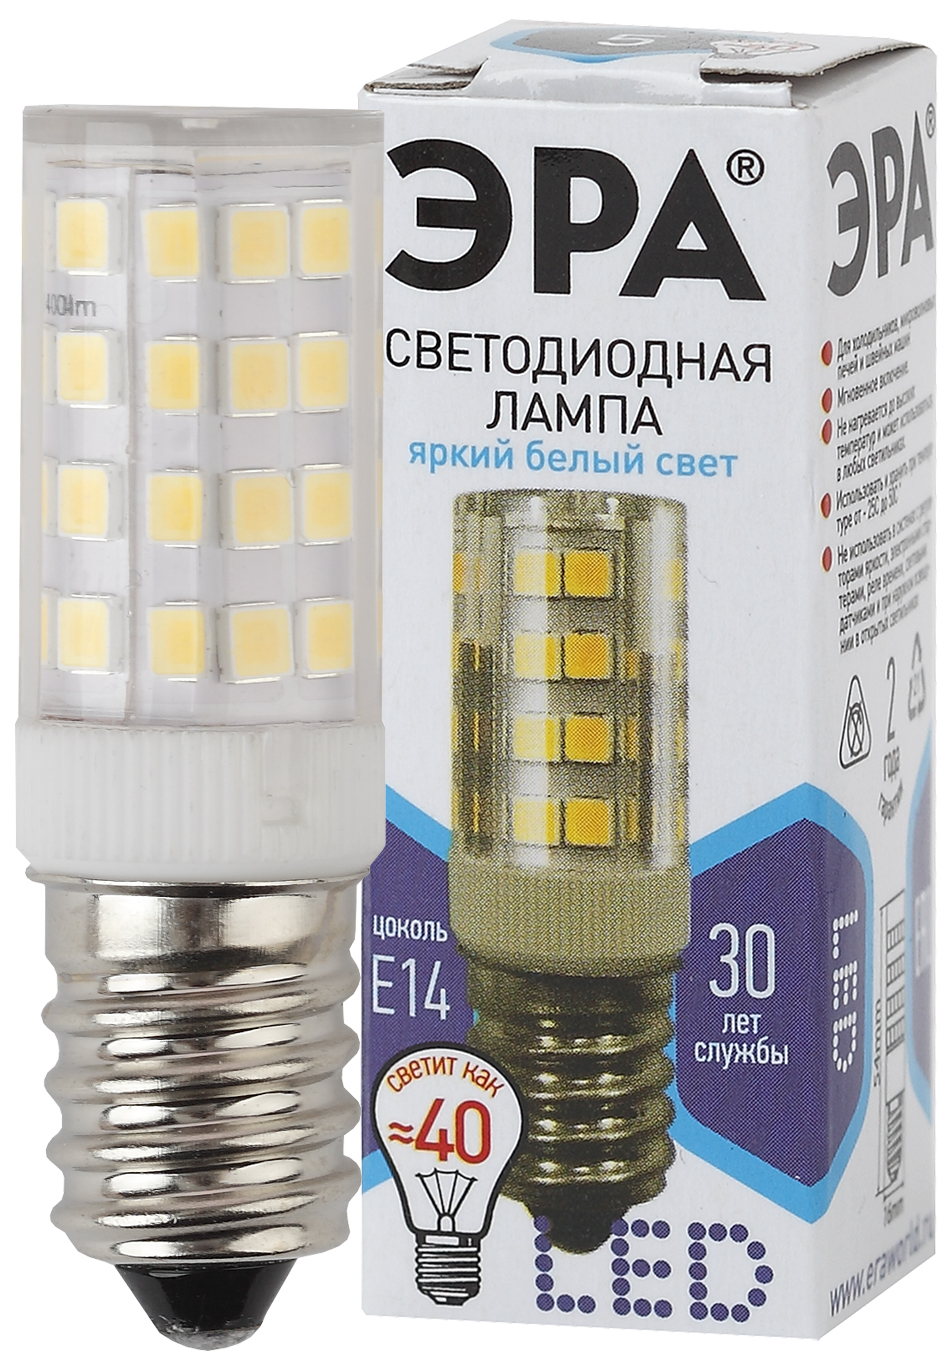 Лампочки LED E14 Эра эра led t25-5w-corn-840-e14